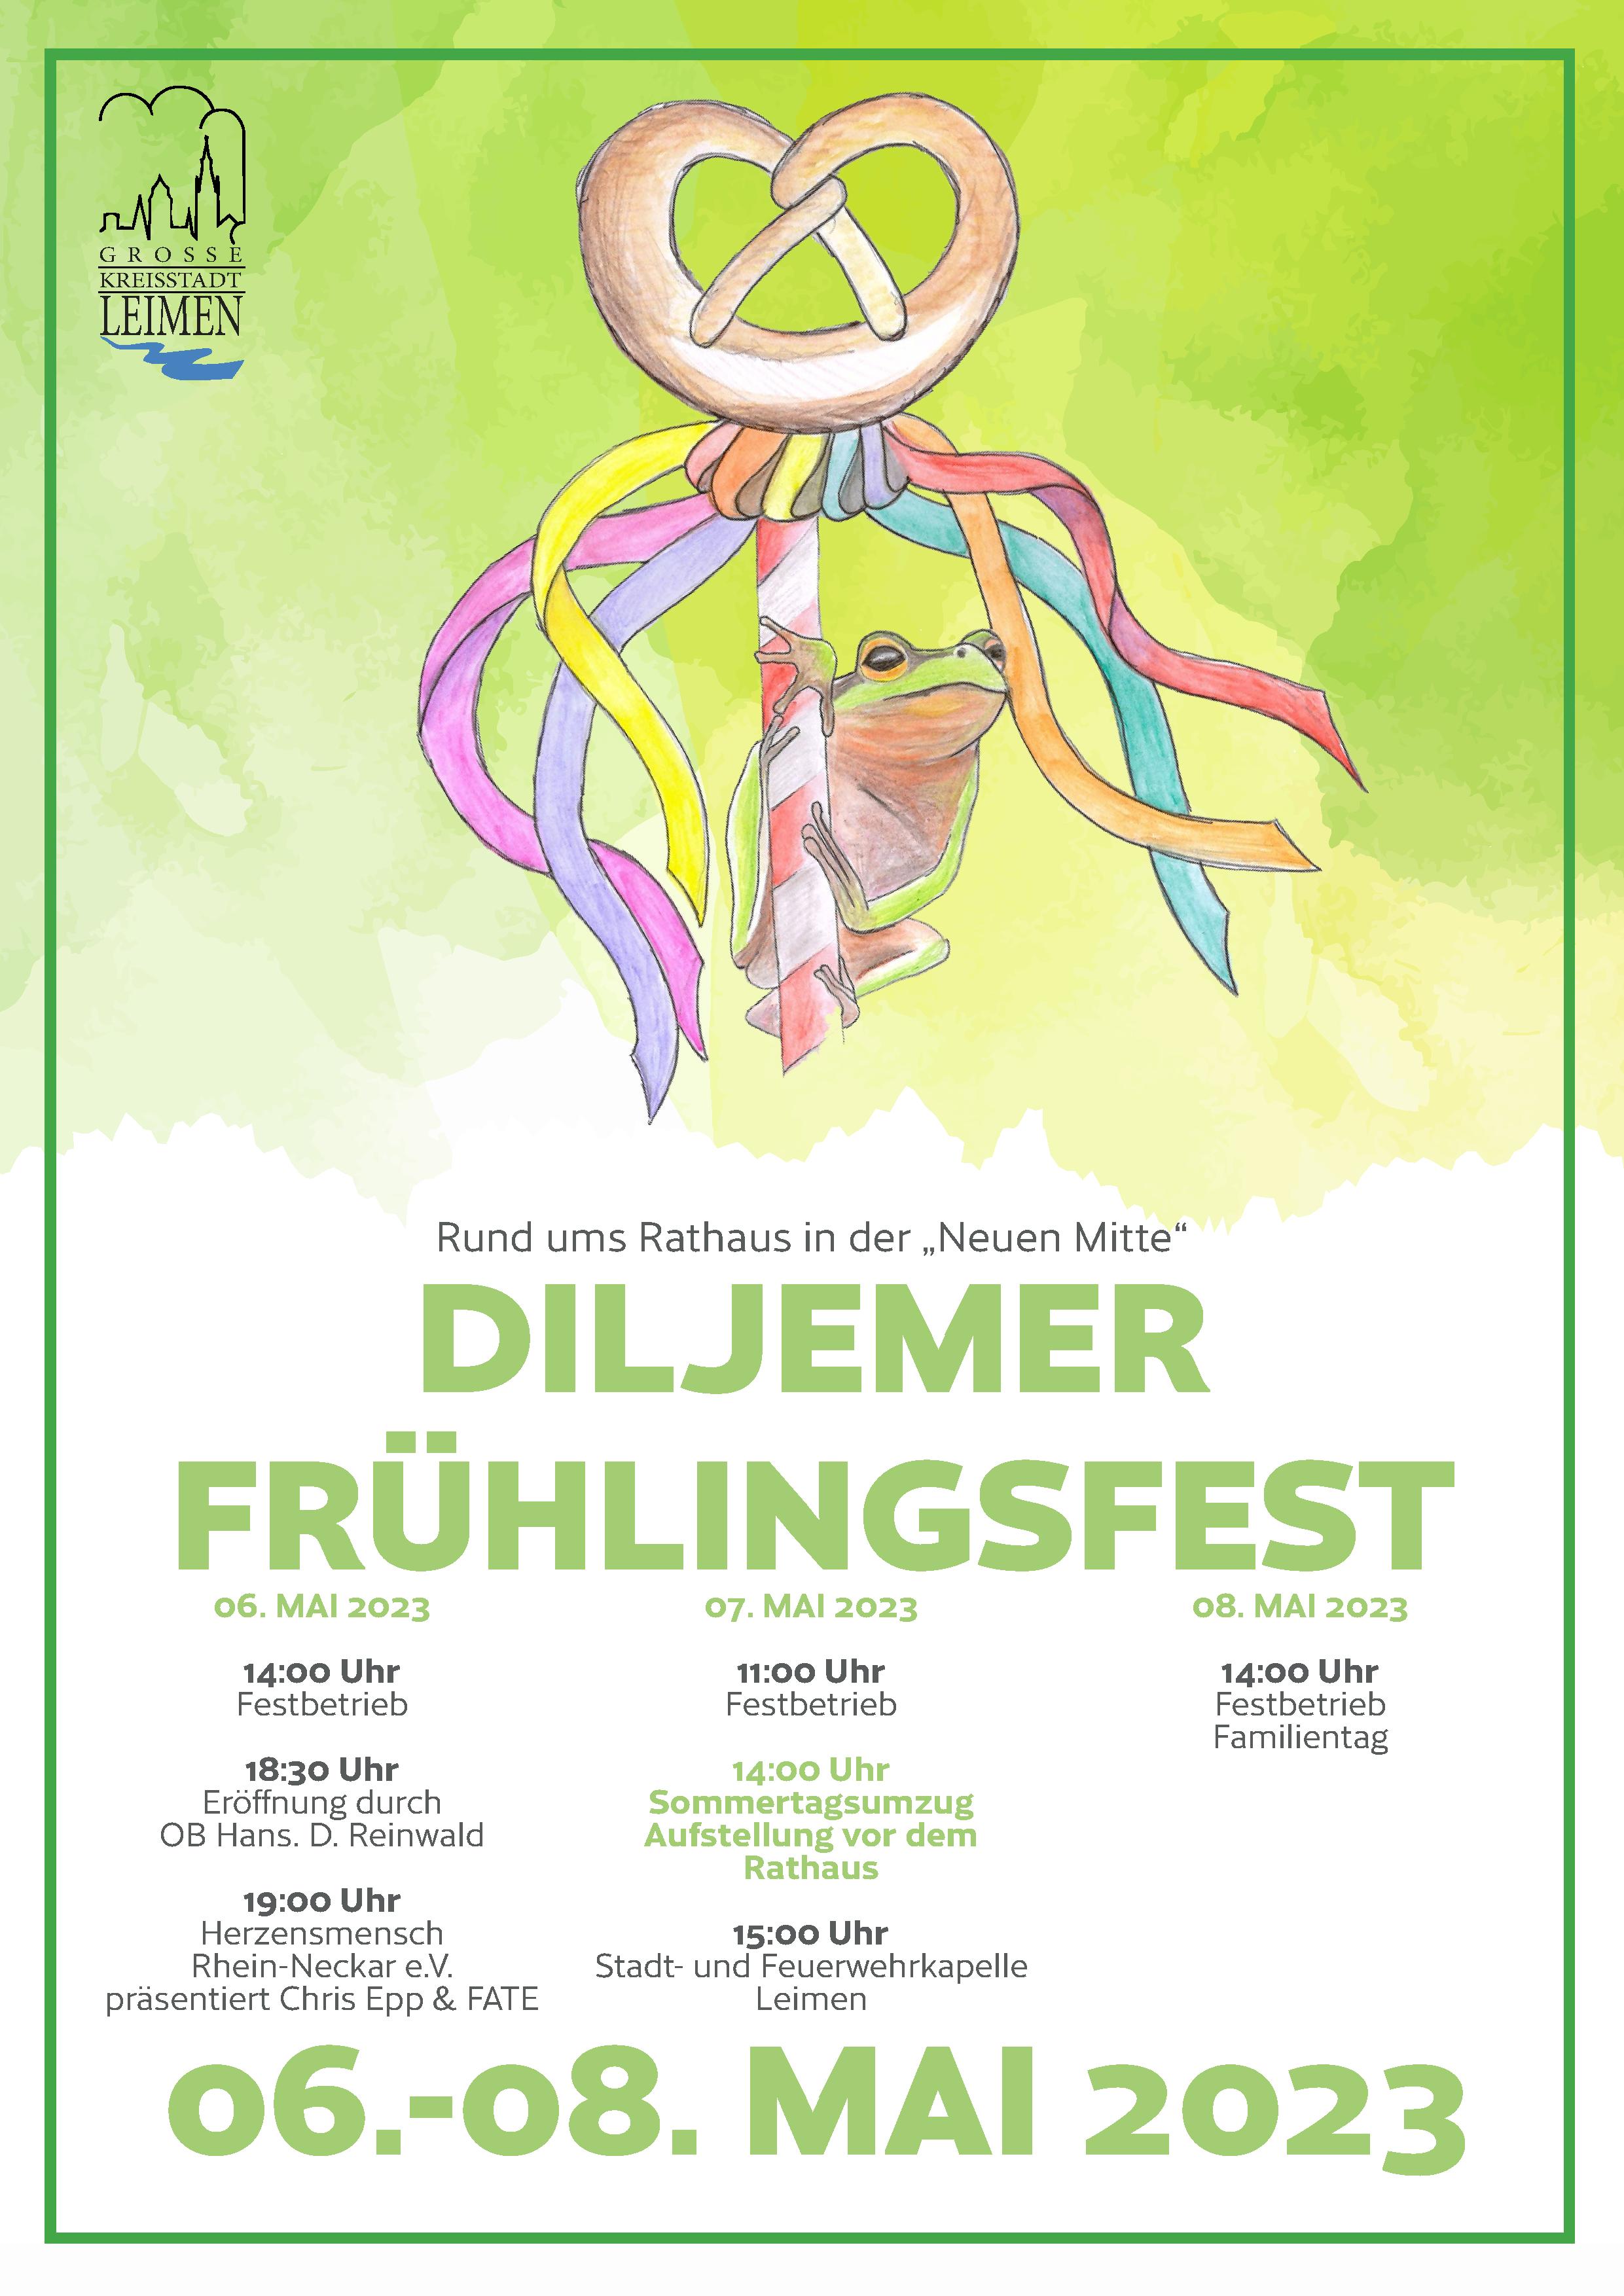  Diljemer Frühlingsfest 2023 